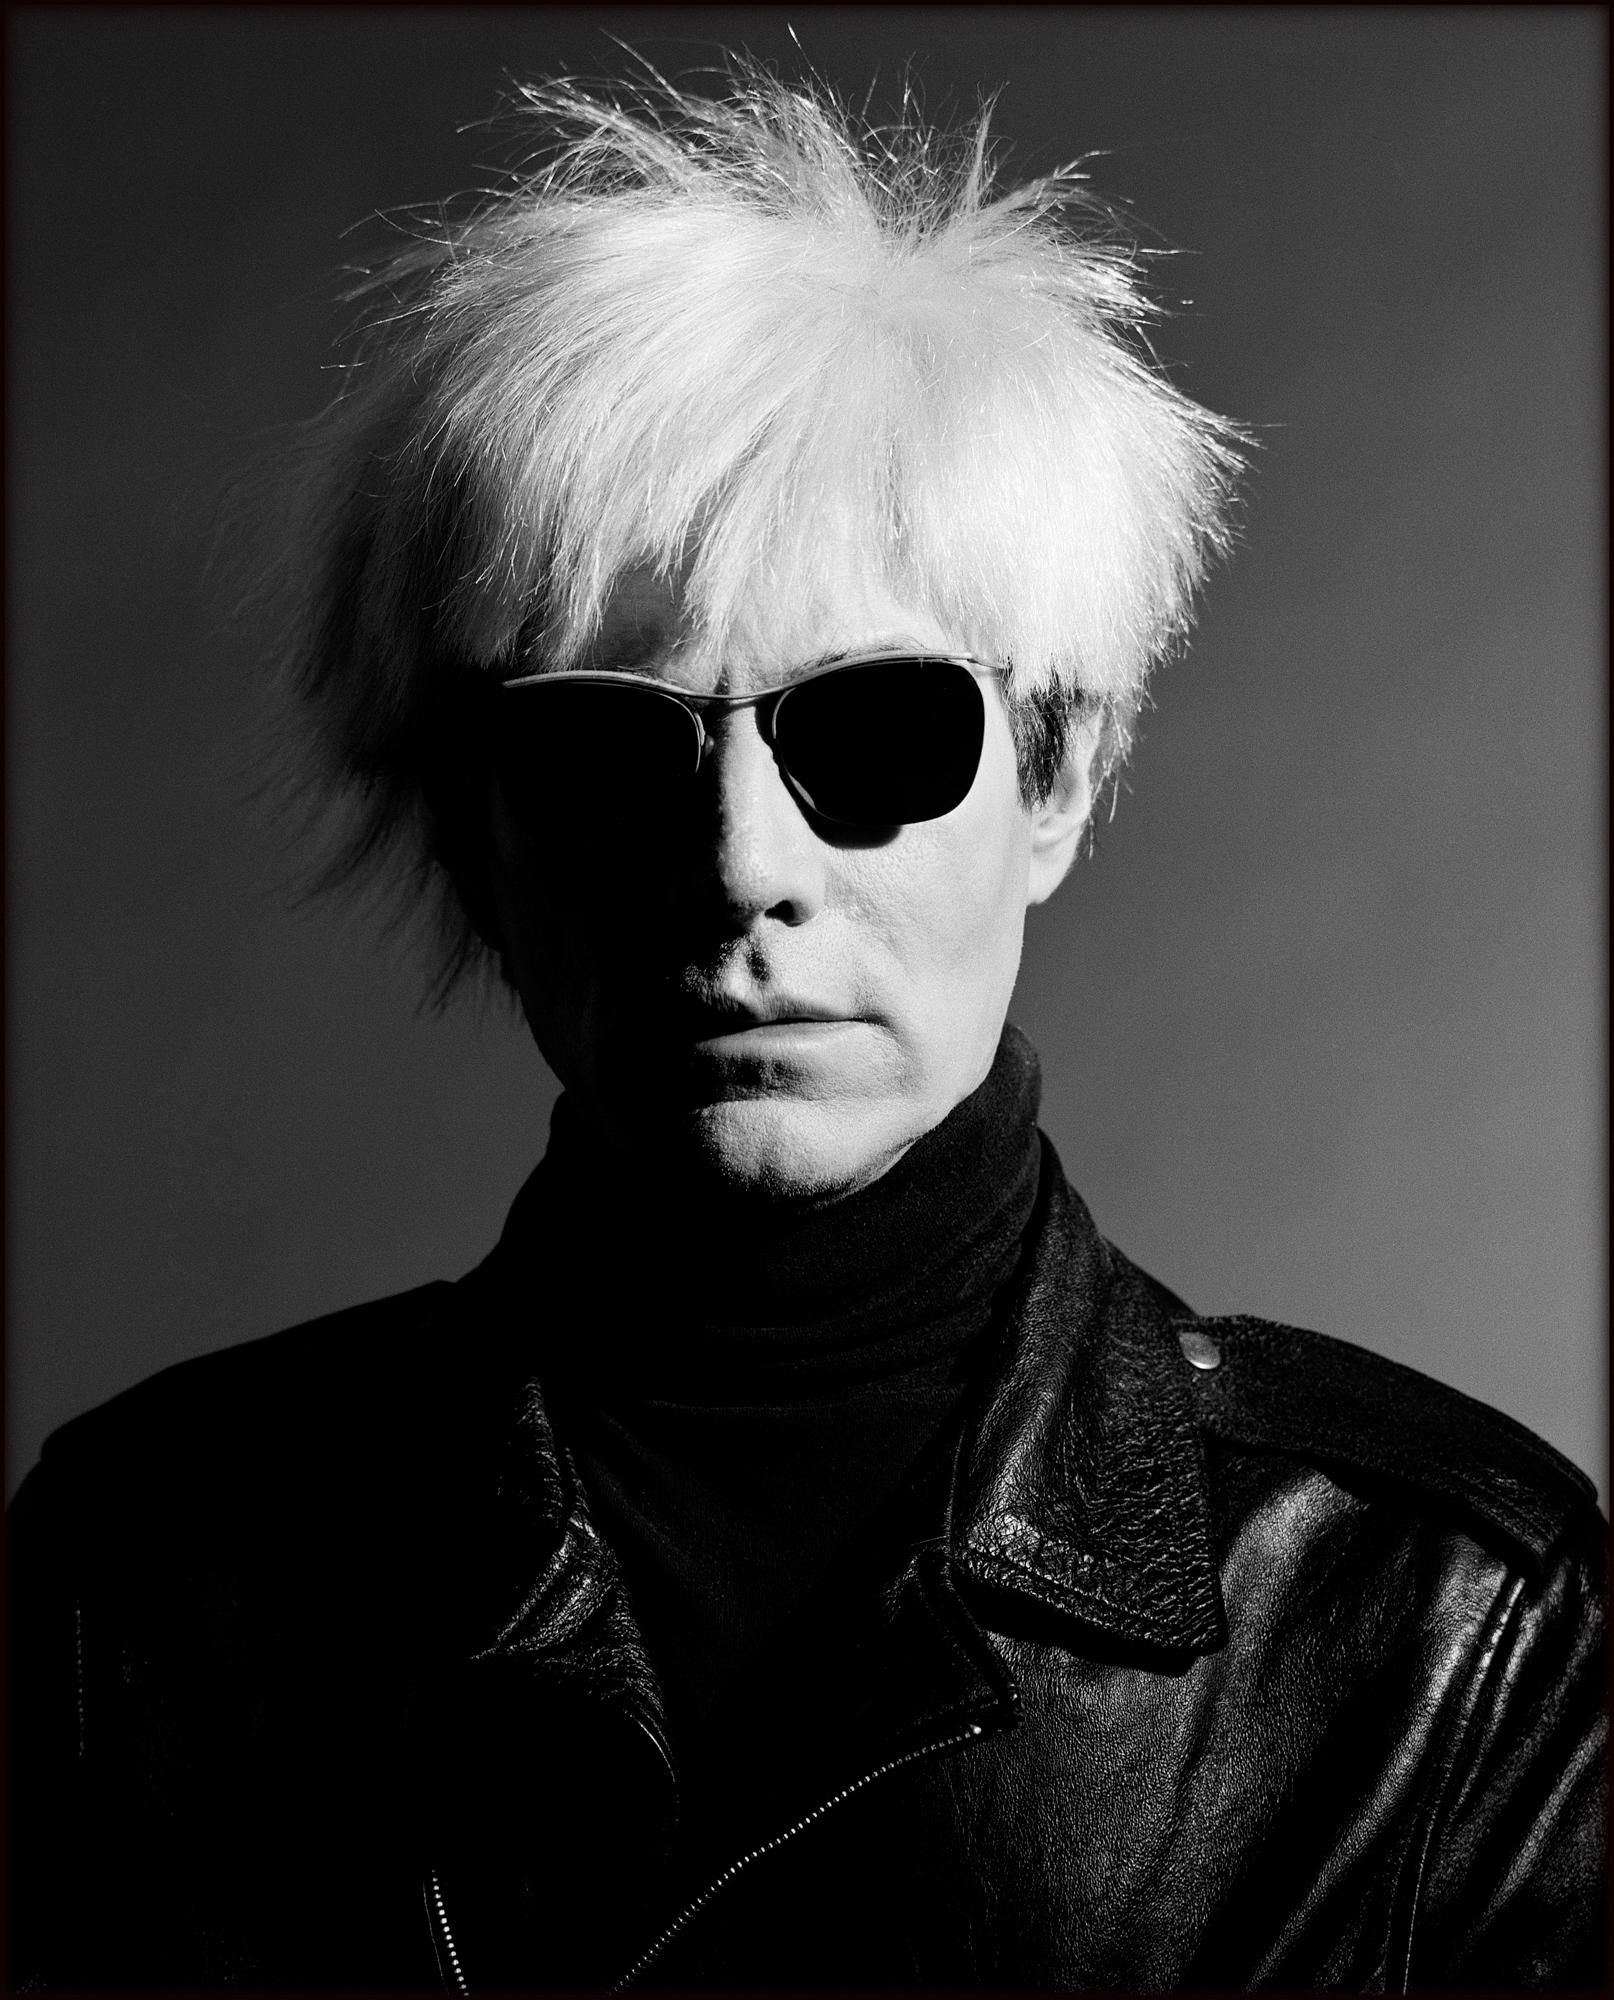 Black and White Photograph Greg Gorman - Andy Warhol, Los Angeles, 21e siècle, Contemporain, Celebrity, Photographie